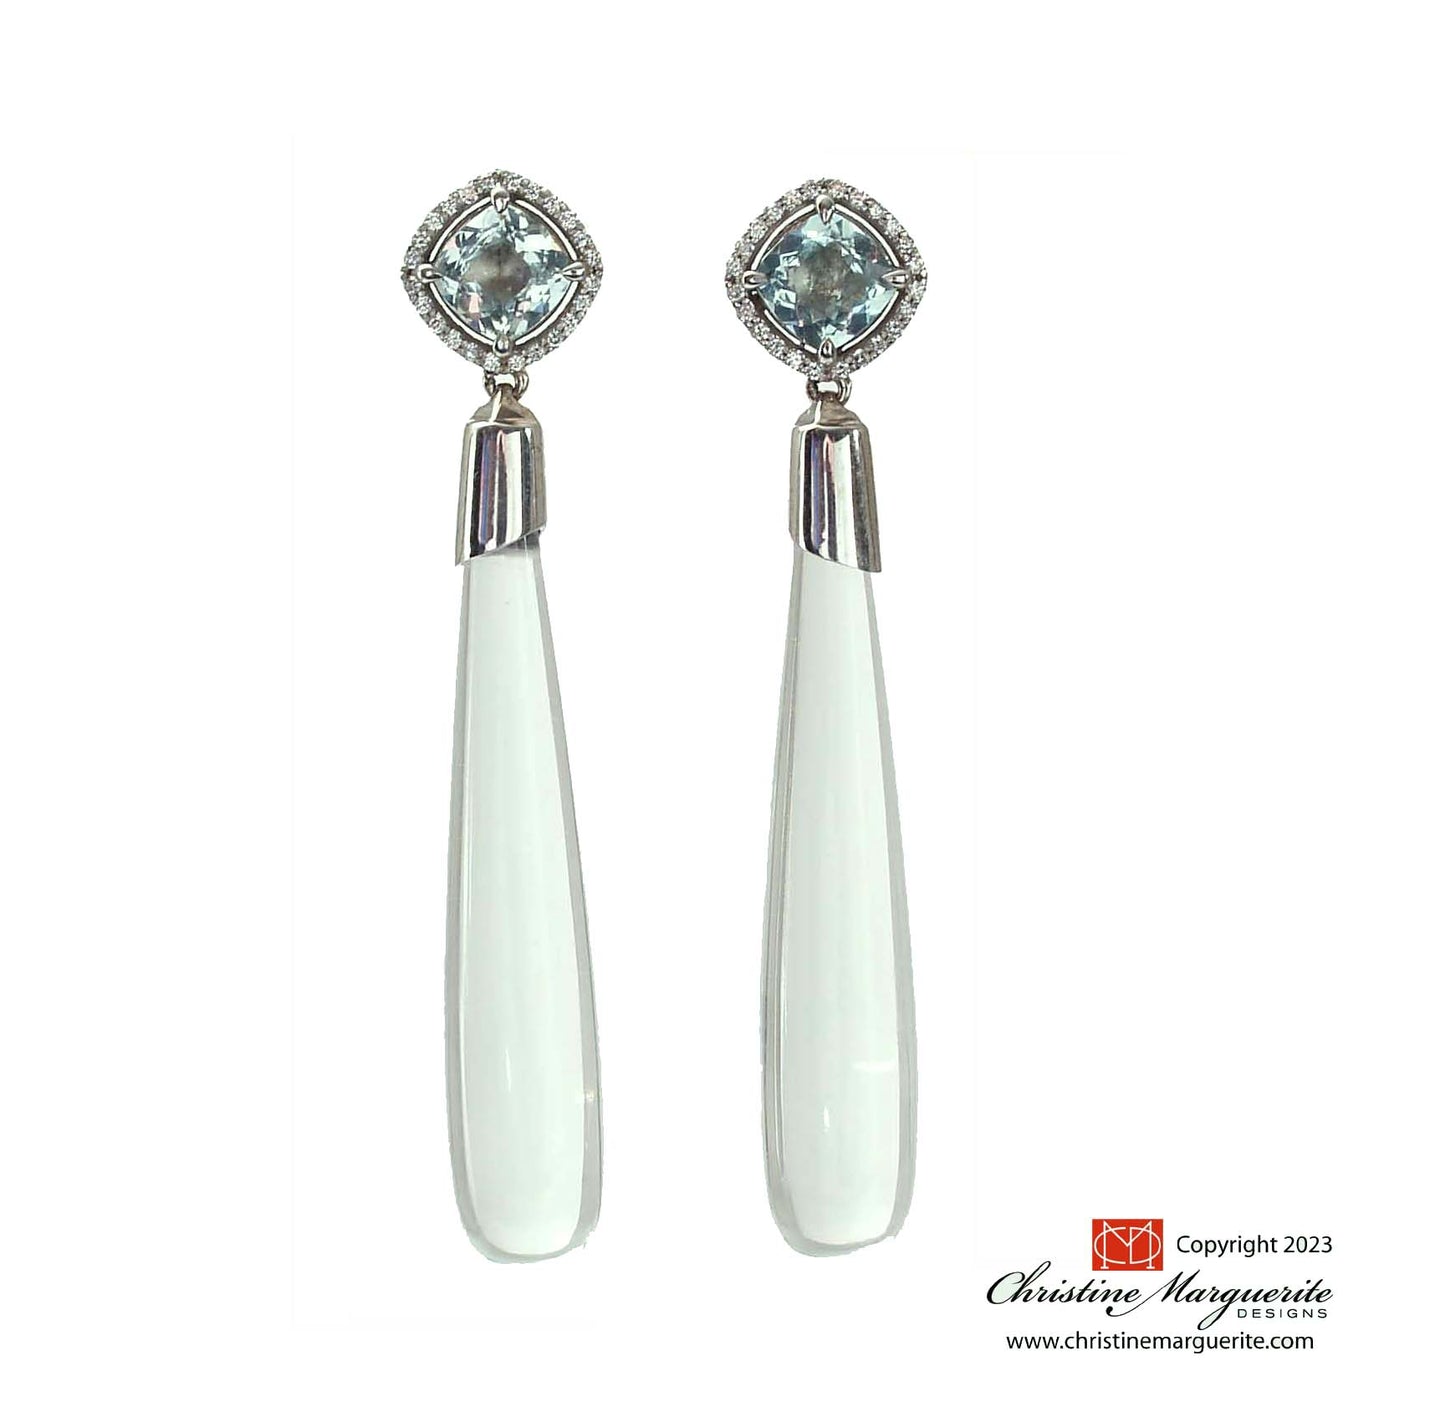 Aqua and Crystal drop earrings